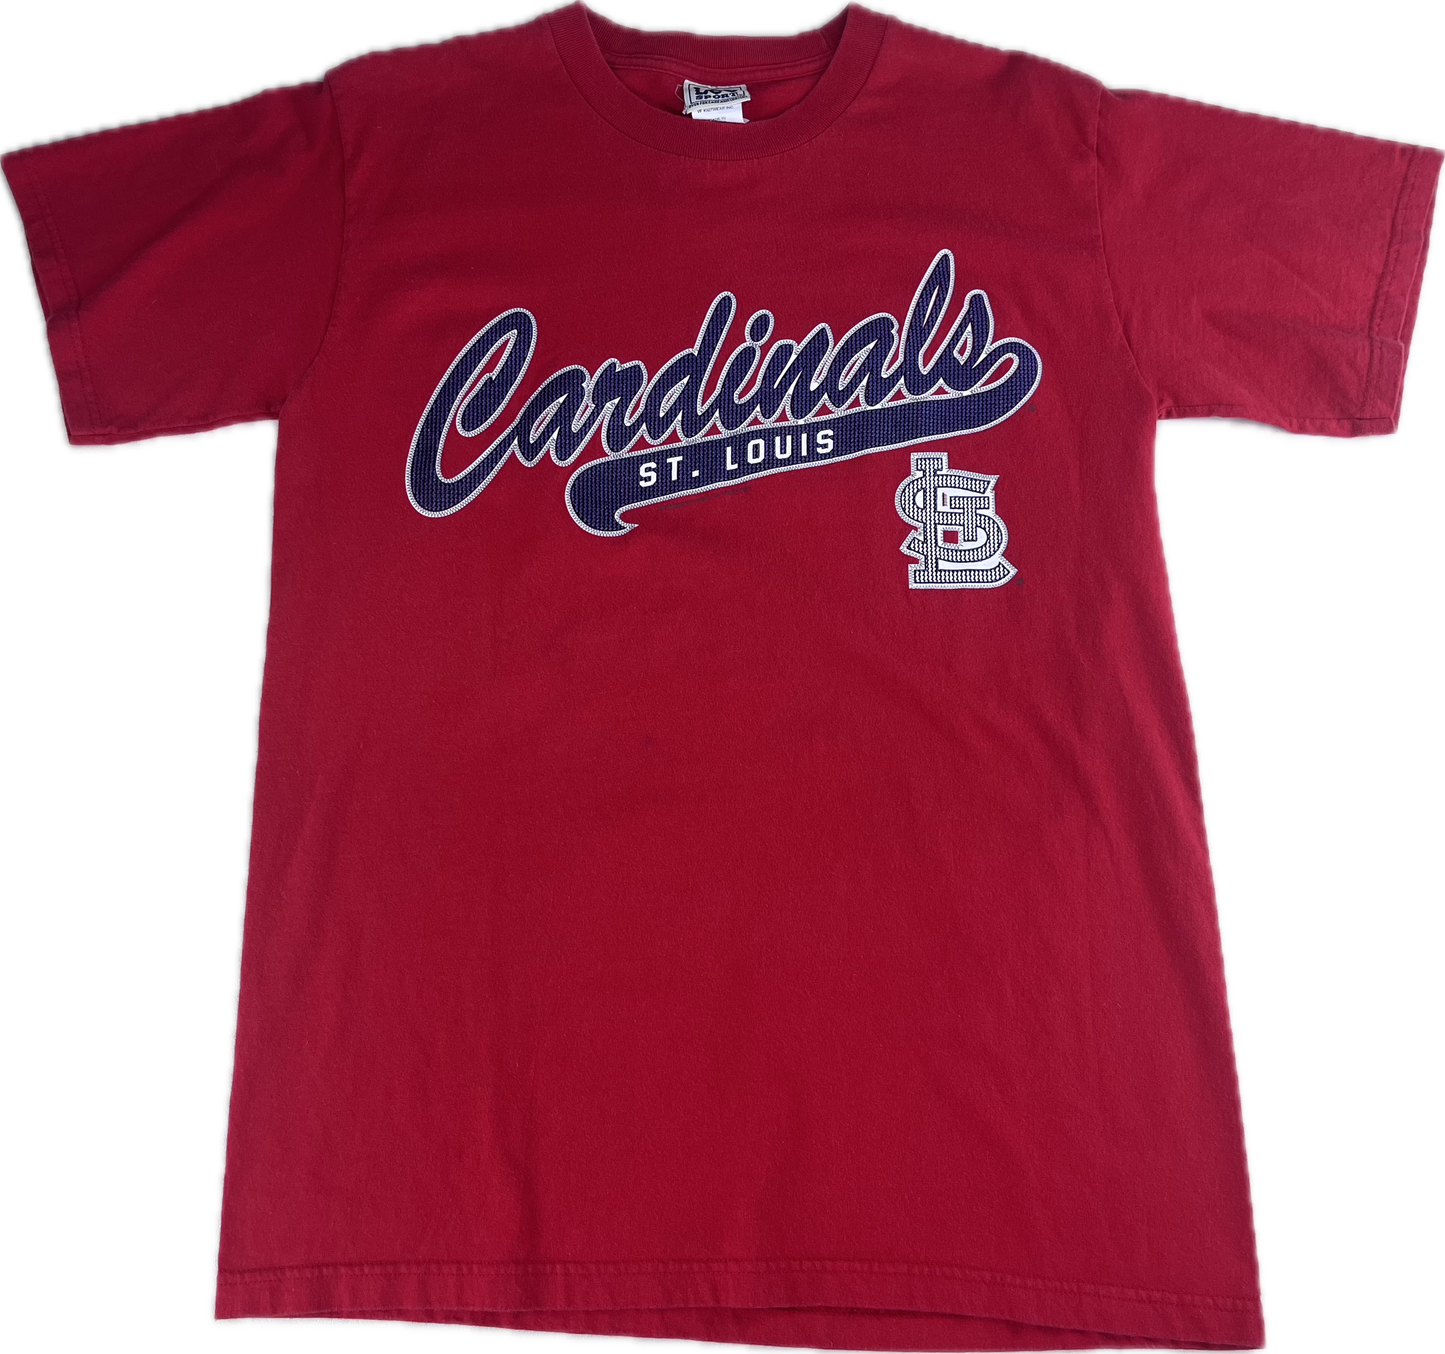 Vintage 2001 St. Louis Cardinals Tee